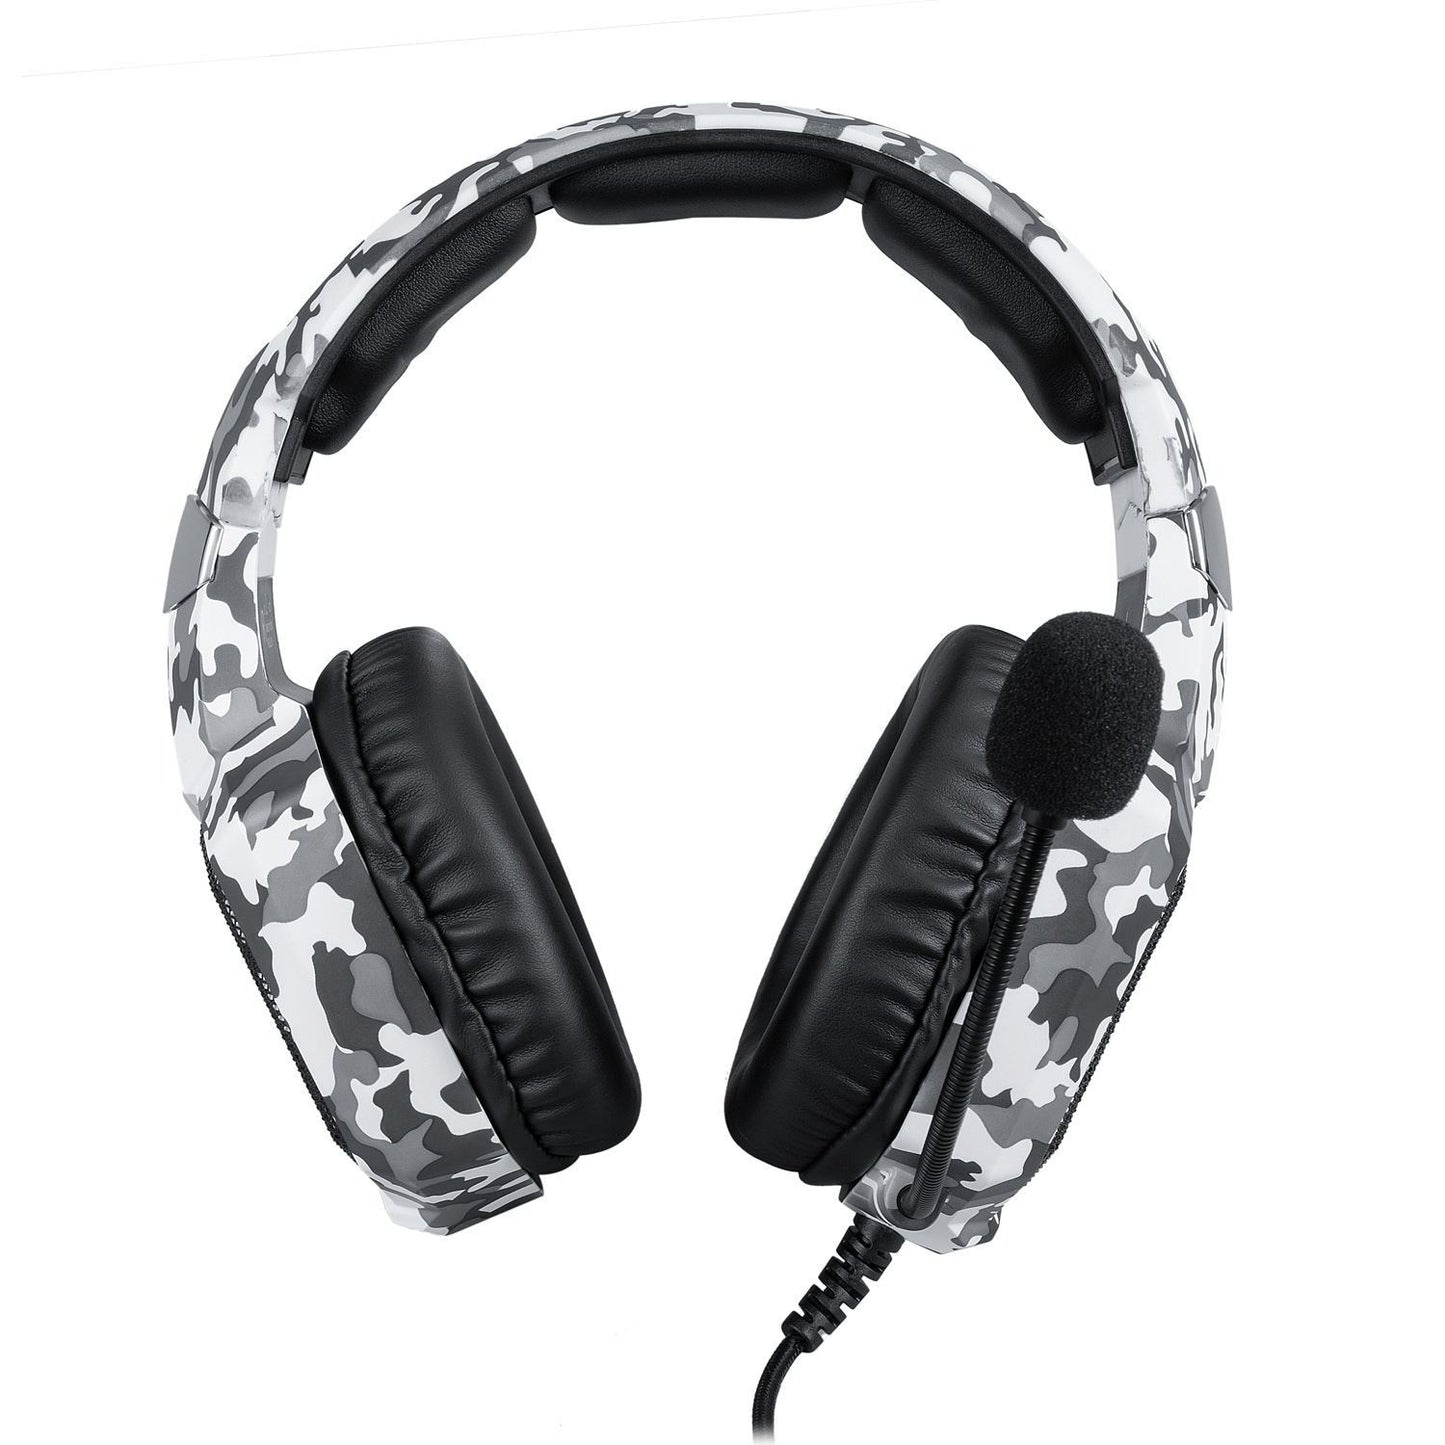 K8 camouflage headphones ShoppingLifes.com